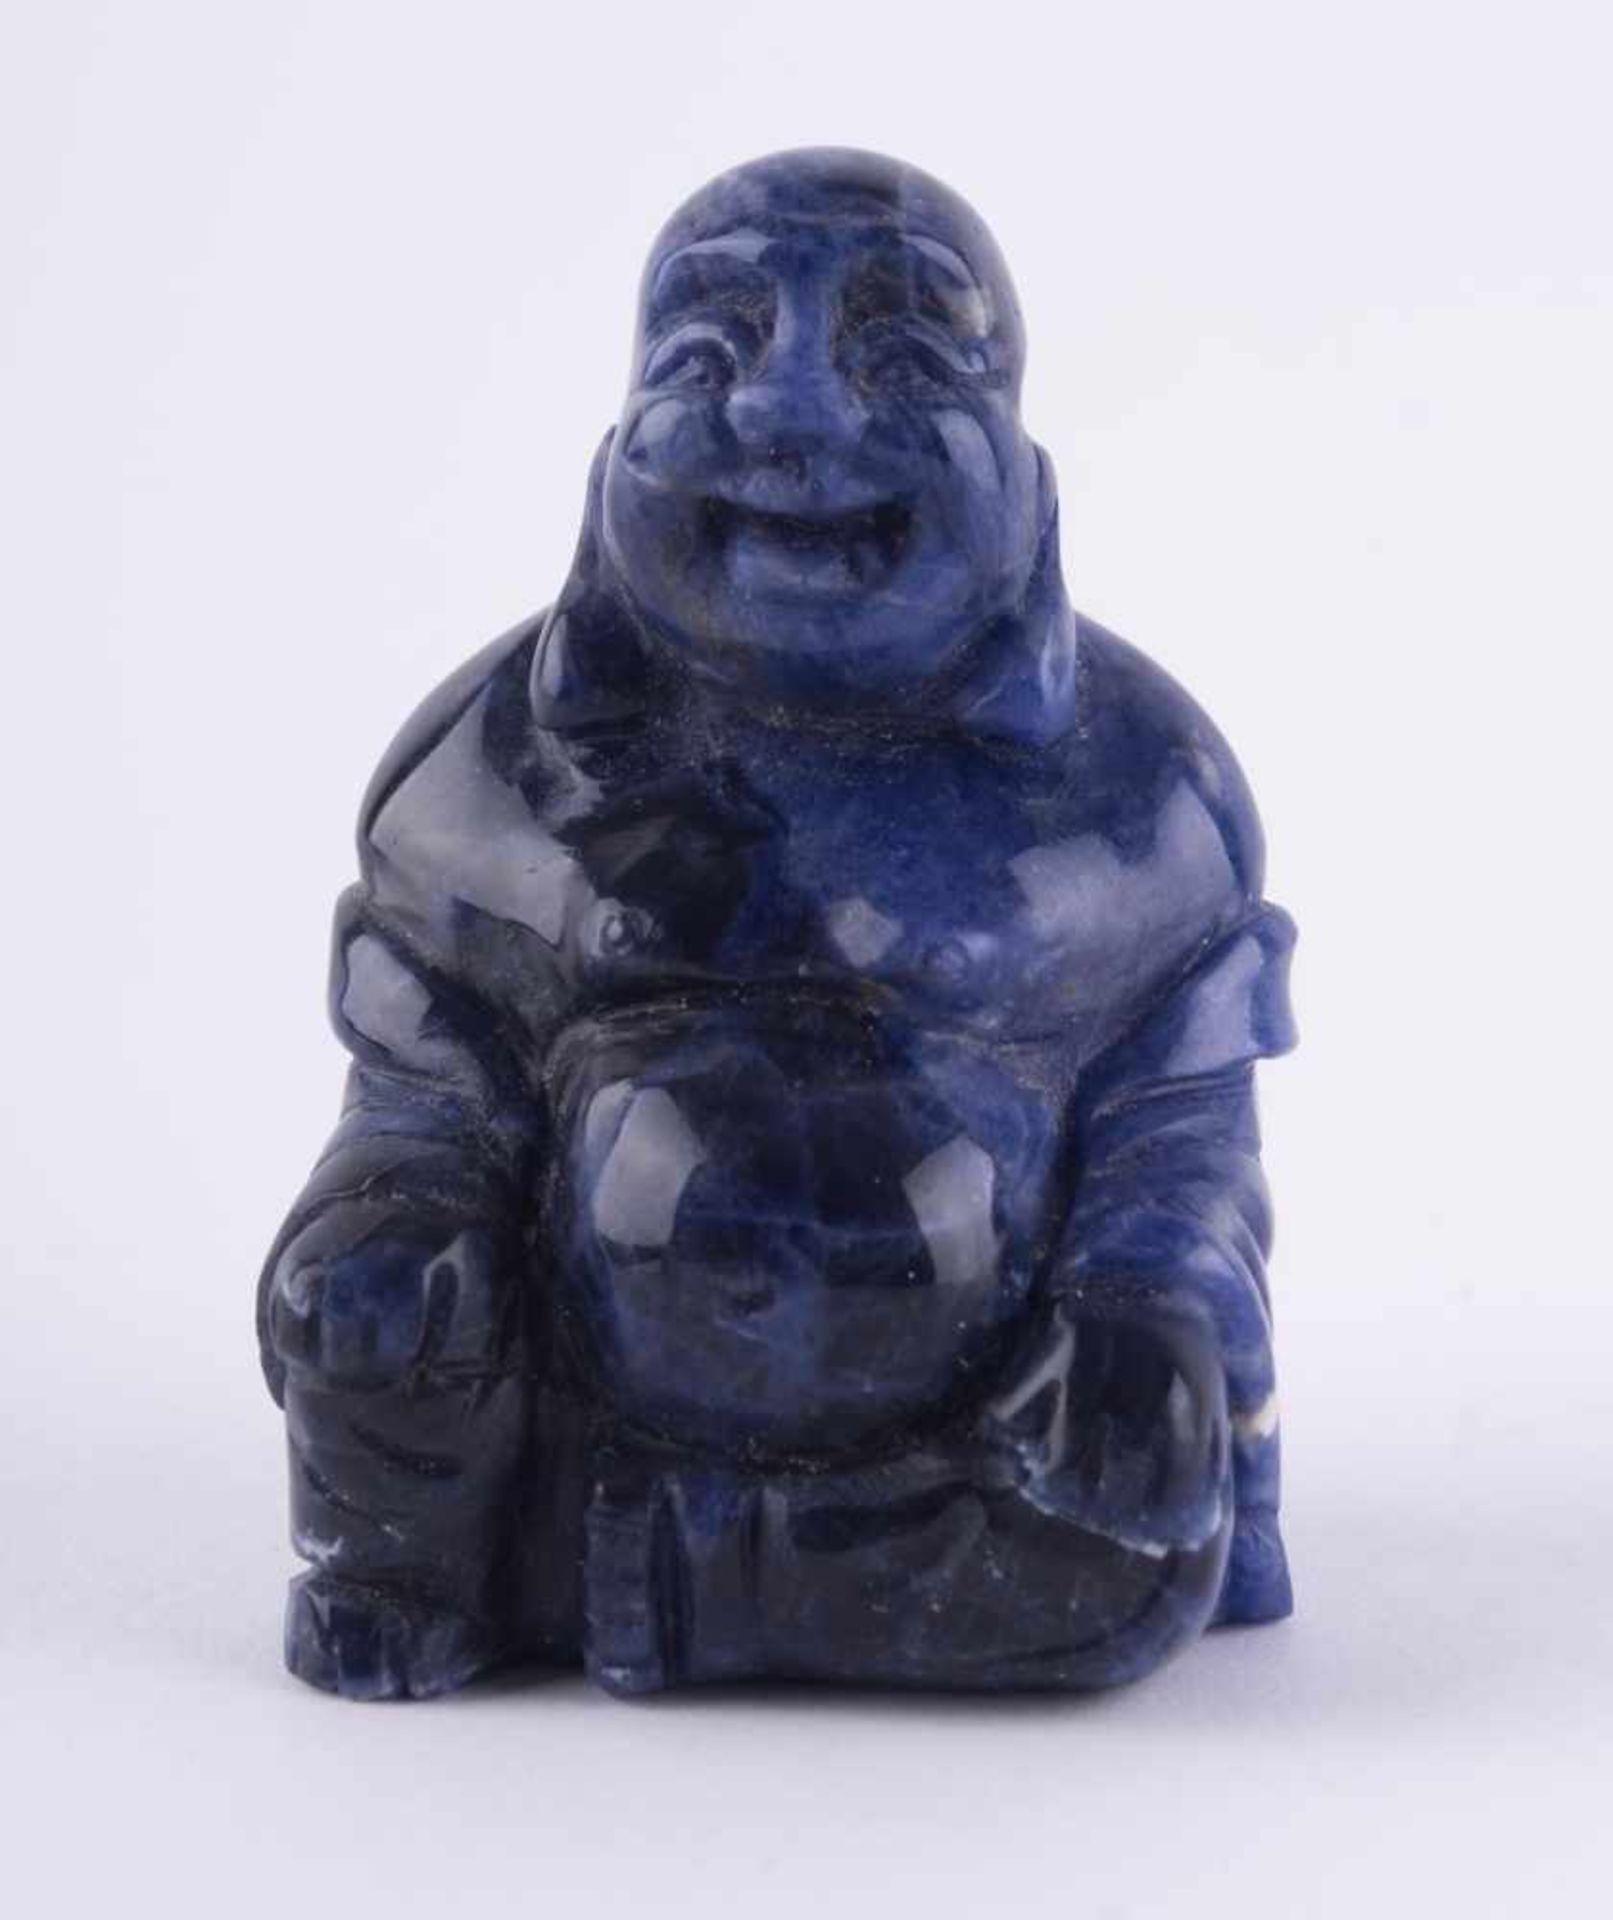 Buddha China um 1900 blauer Achat oder Lapislazuli, H: ca. 5,2 cm Buddha, China about 1900 blue